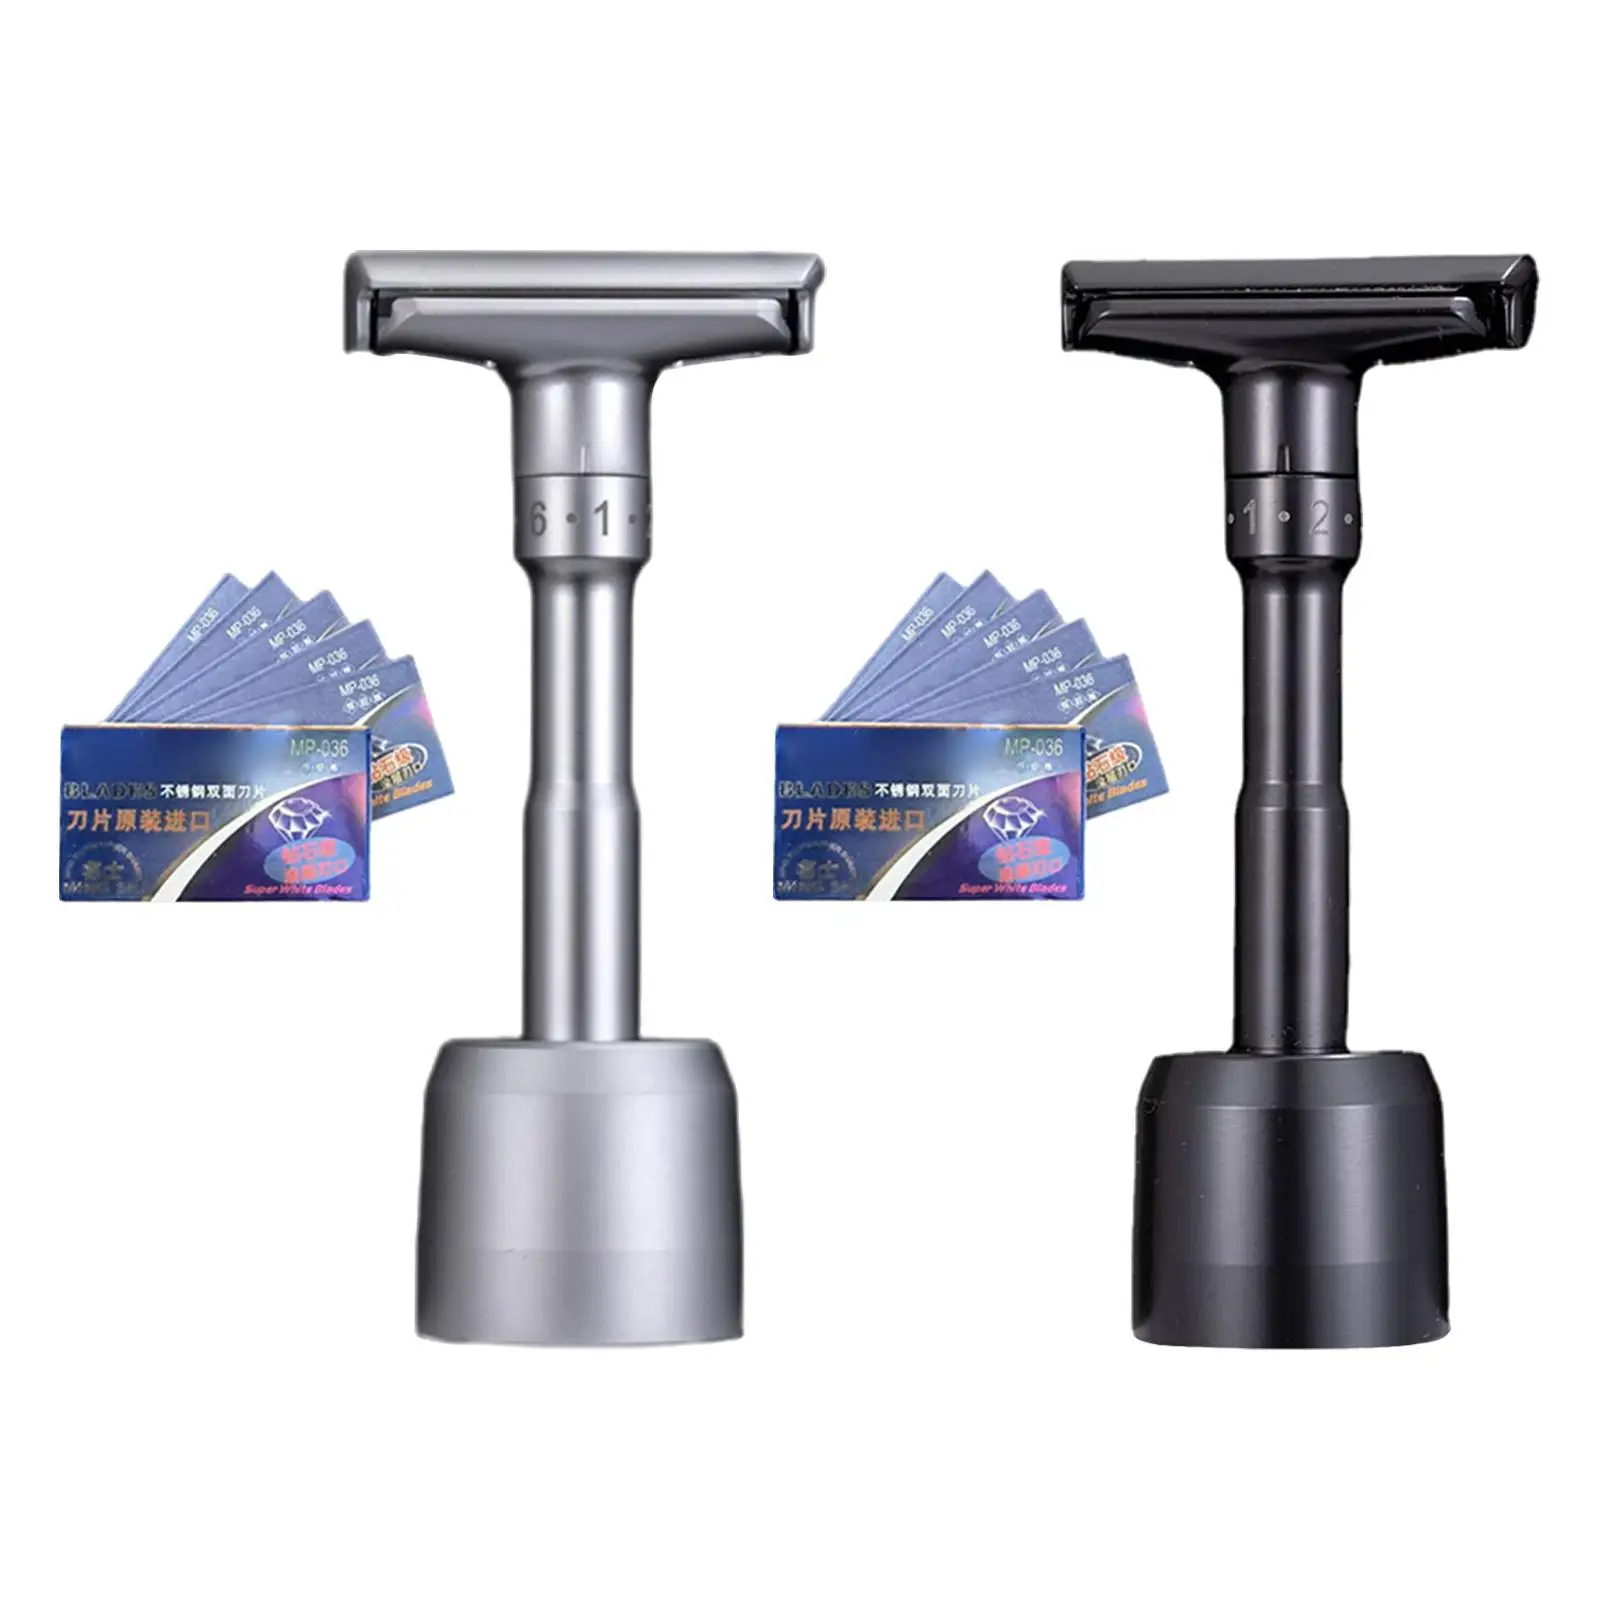 Adjustable Double Edge Safety Razor Manual Shaver Wet Shaving Shaver for Salon Home